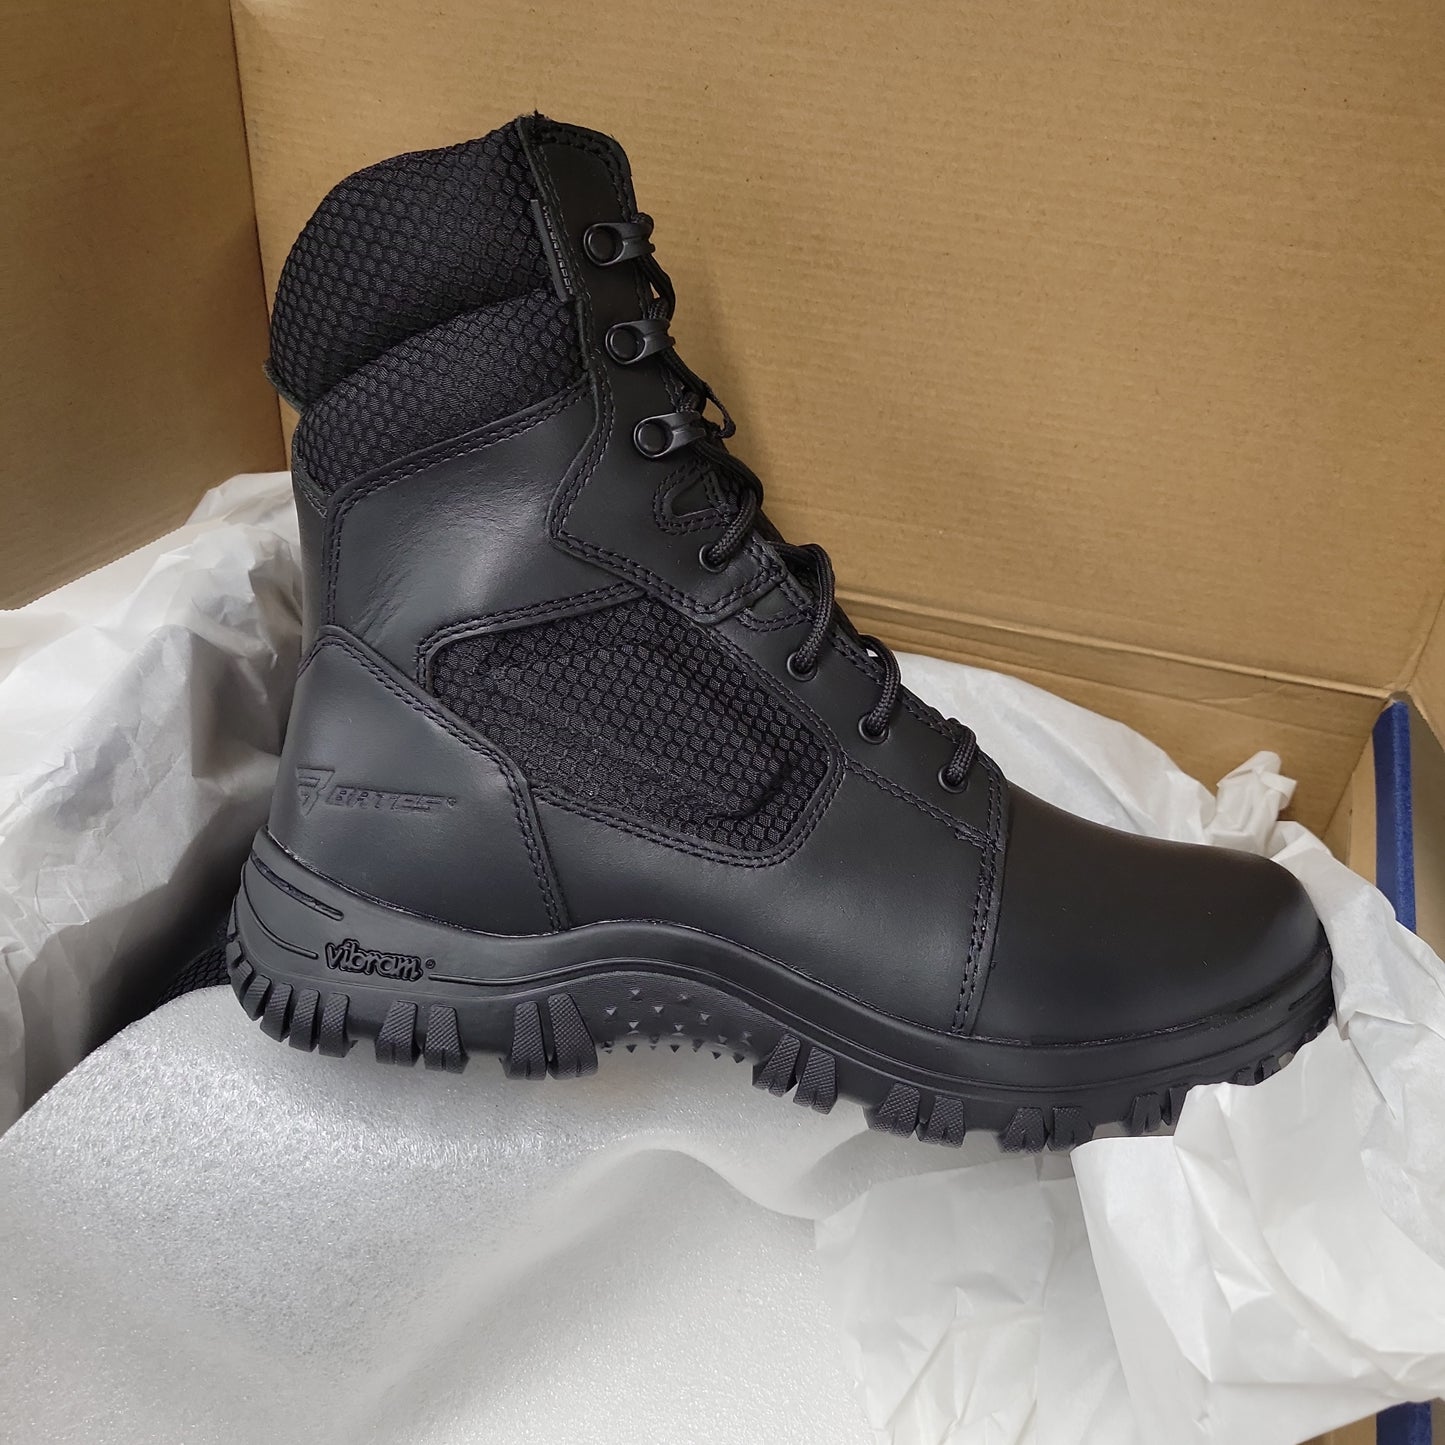 Bates Boots Maneuver Waterproof Side-Zip, Black, SZ 8.5W E05508-8.5EW